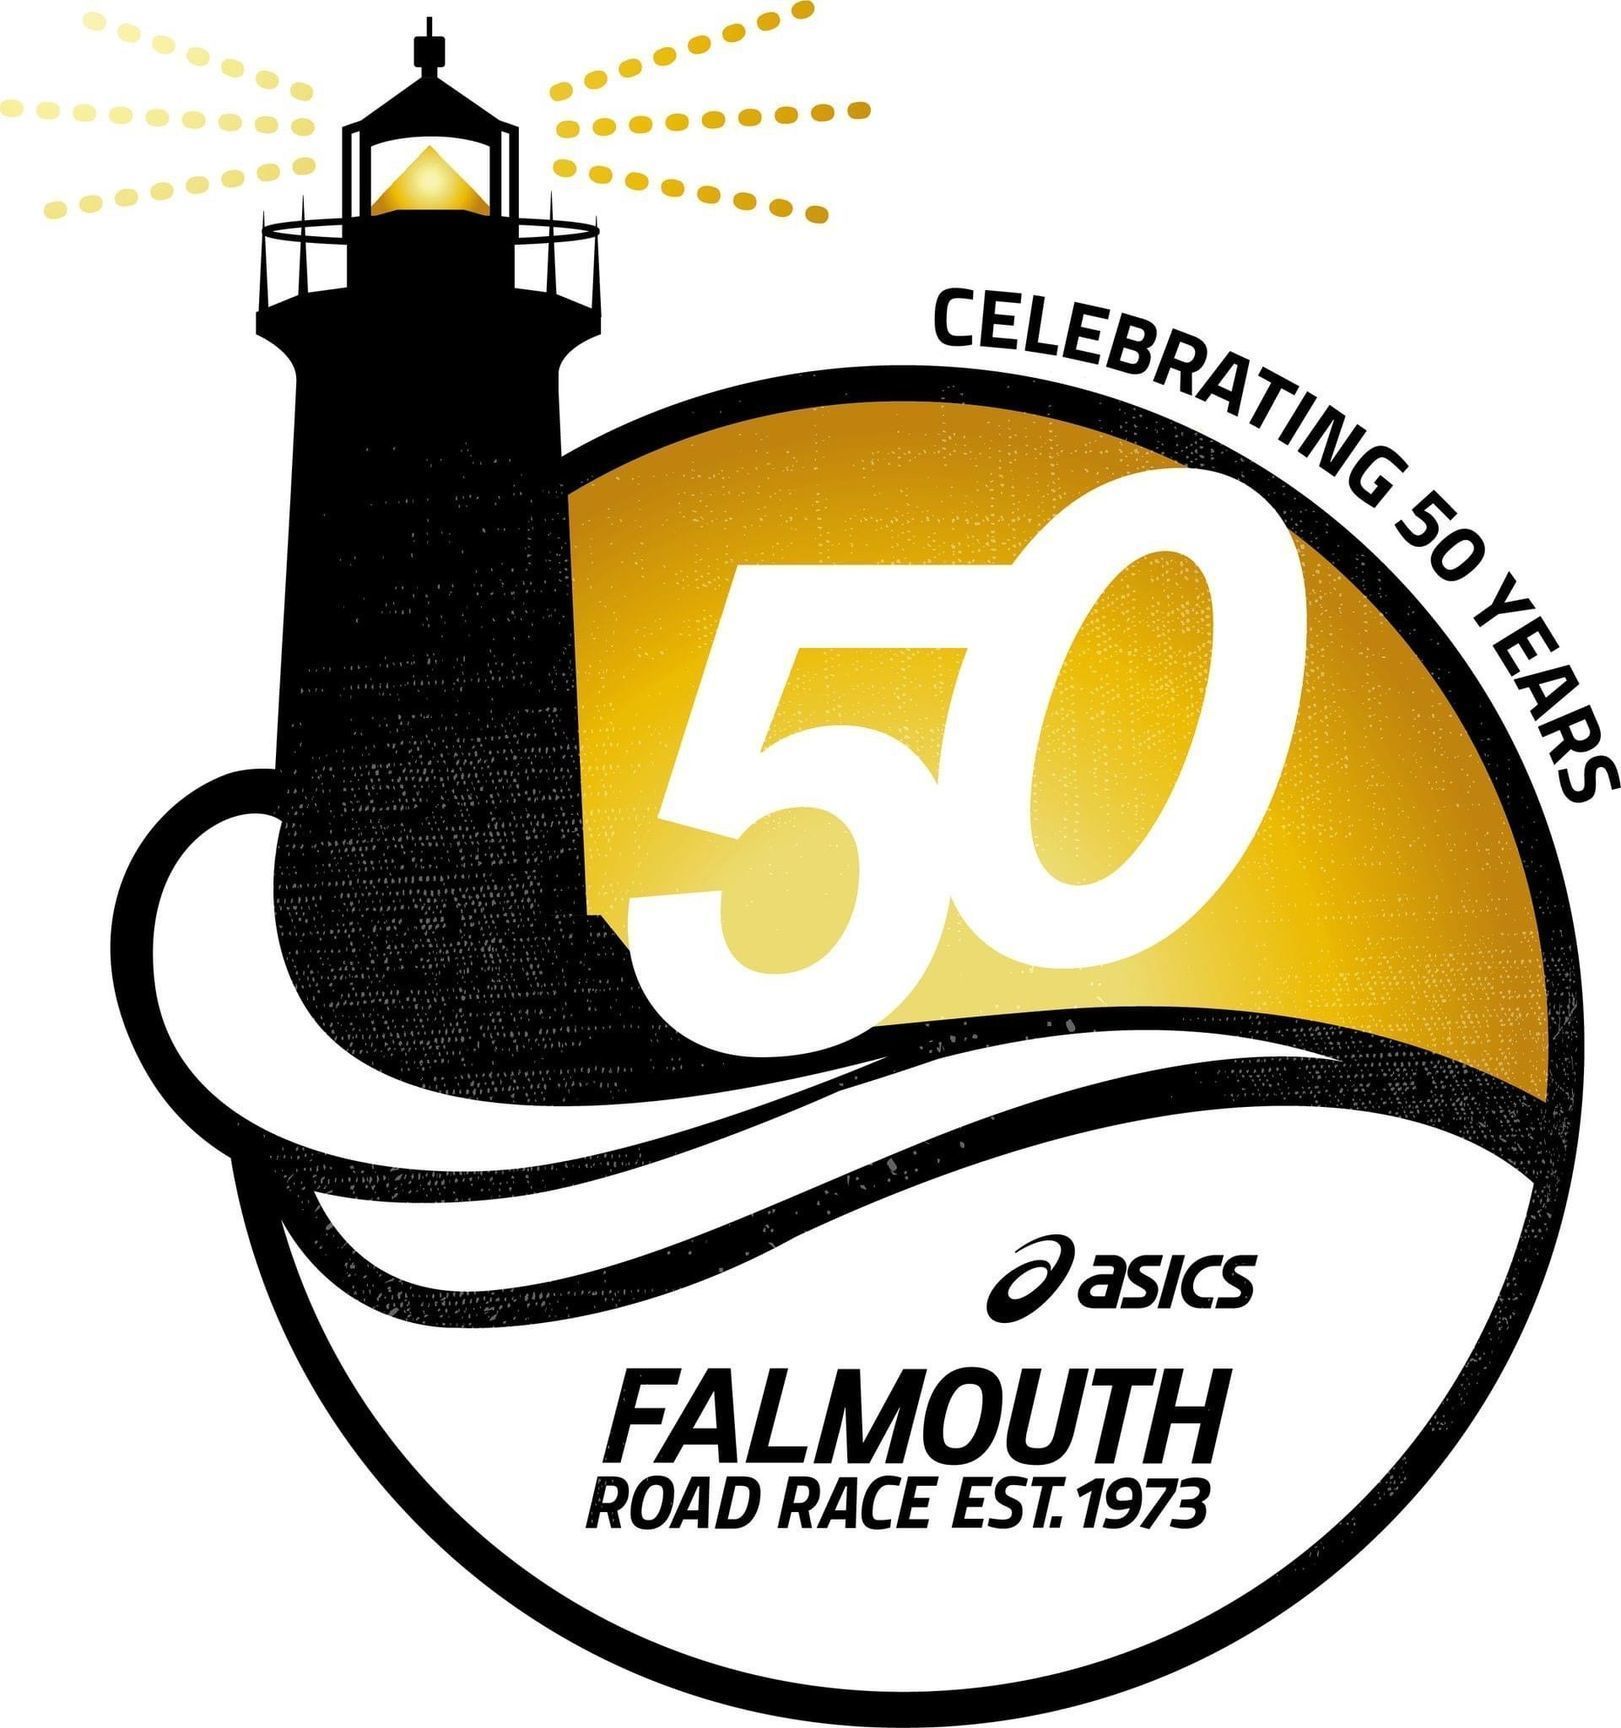 Falmouth Road Race 